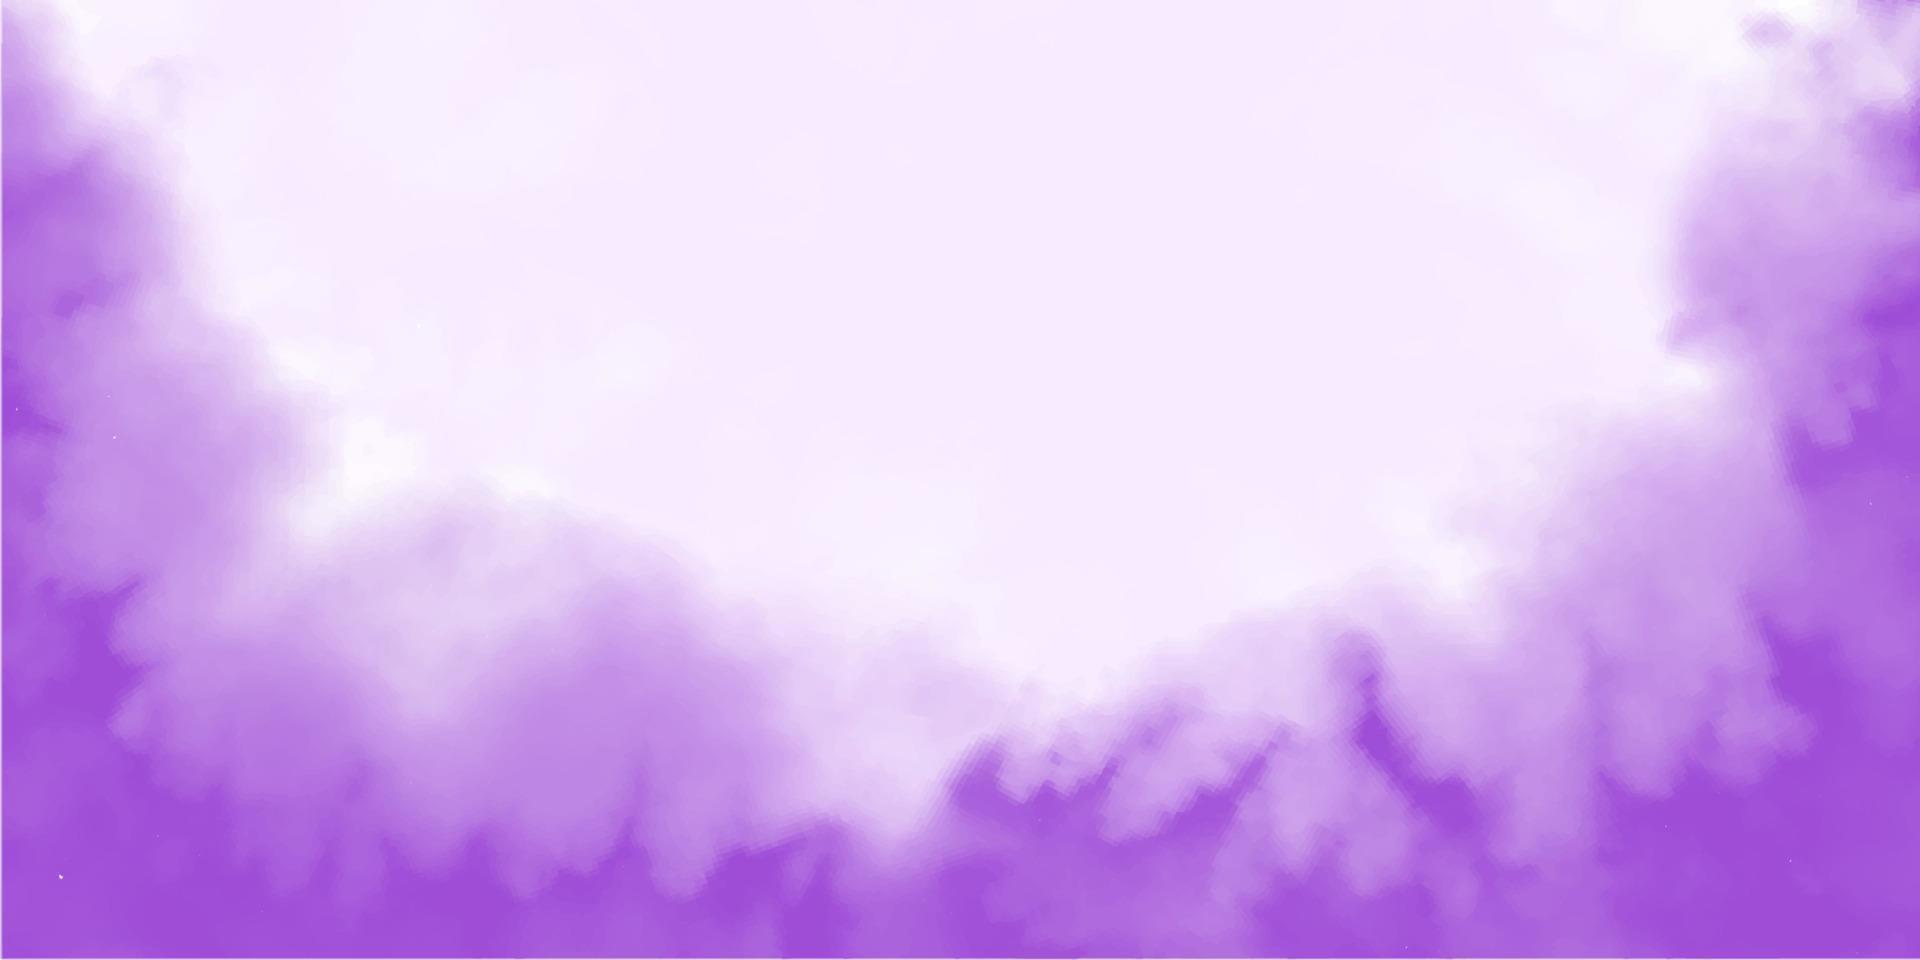 zachte paarse aquarel achtergrond vector